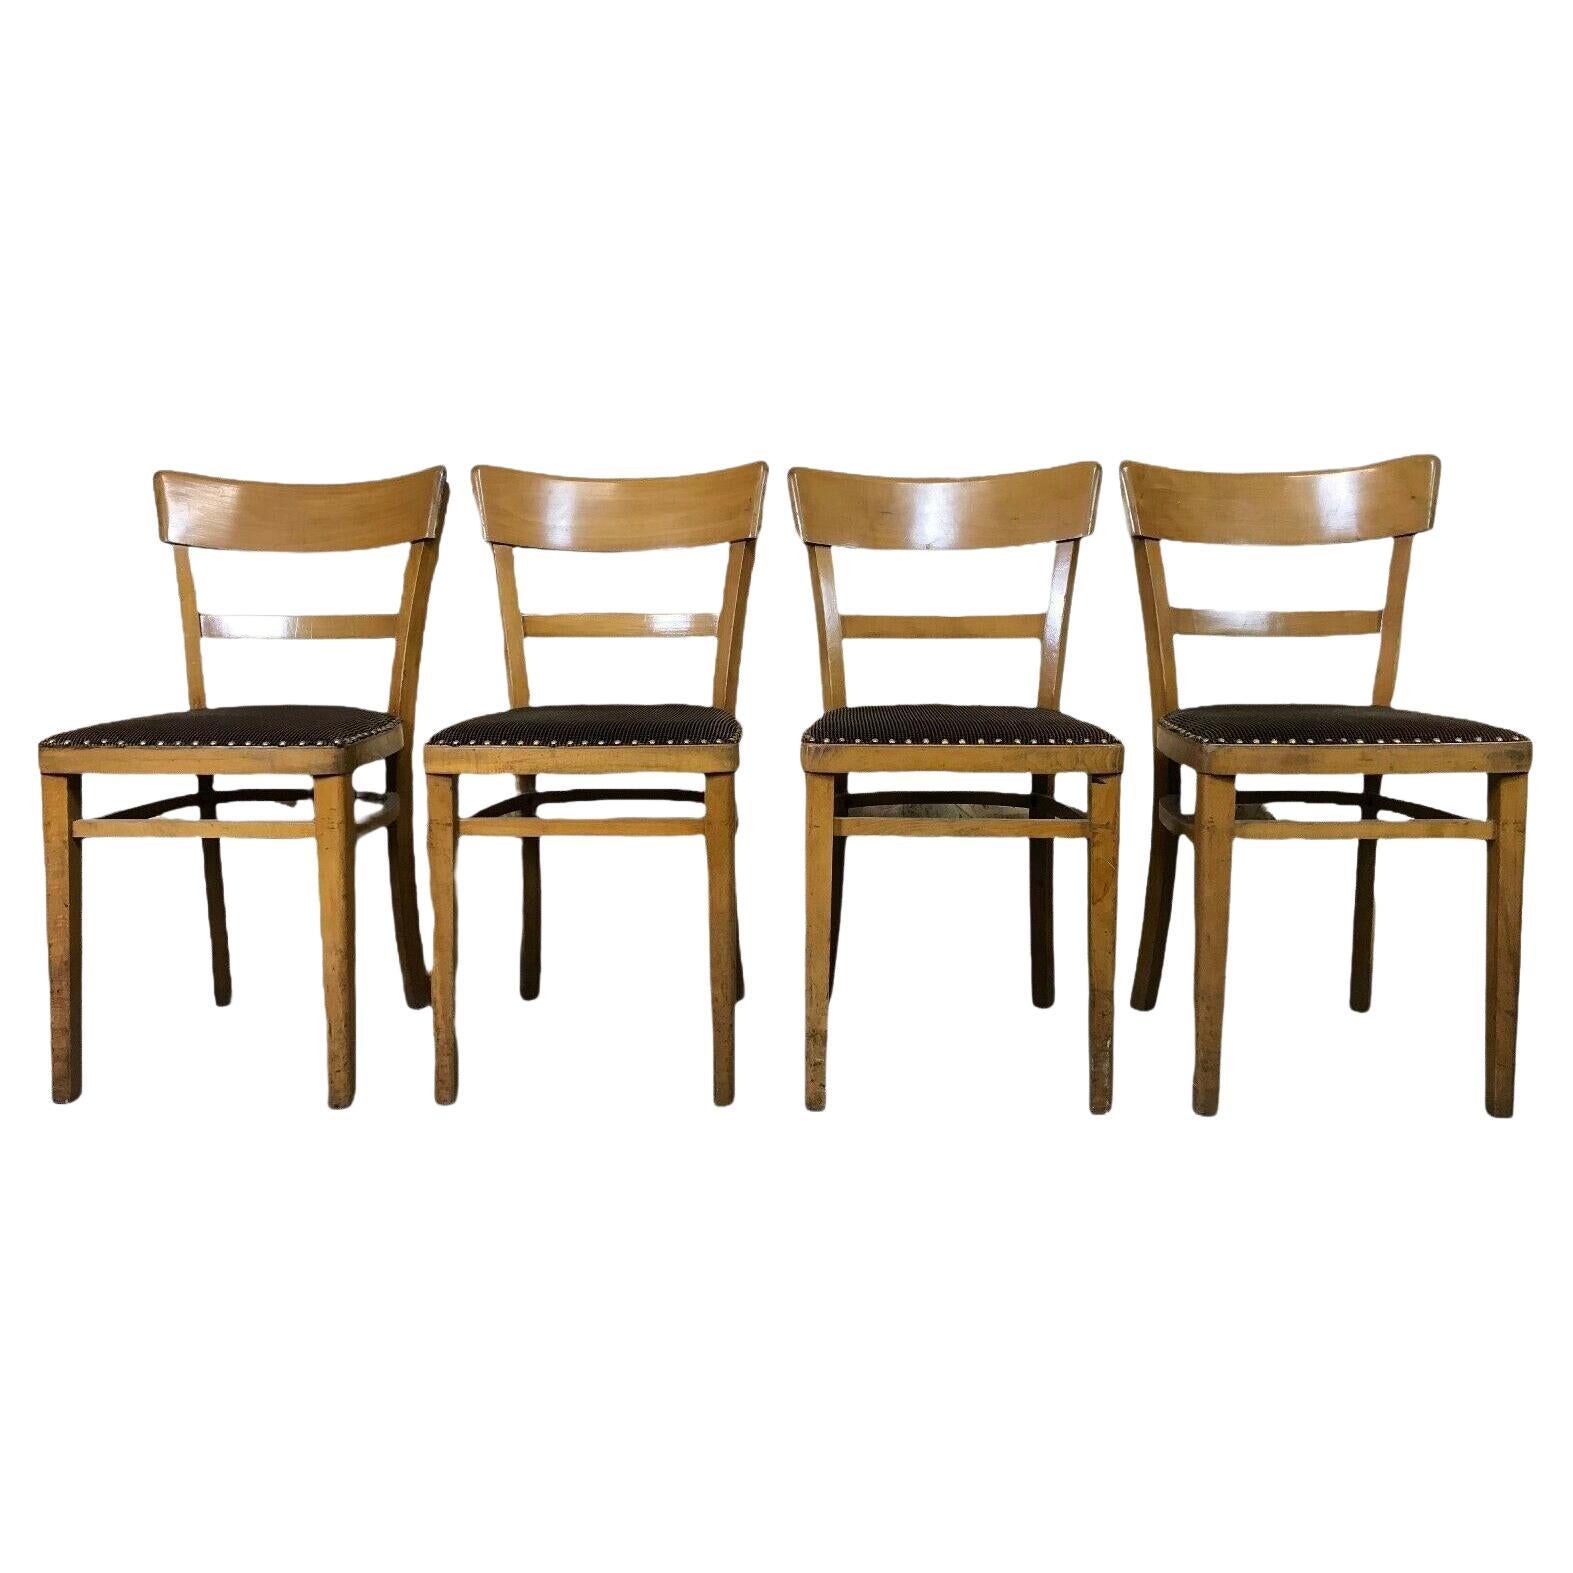 50s-60s Chair Chairs Frankfurt Chair Bauhaus Mid Century Design For Sale